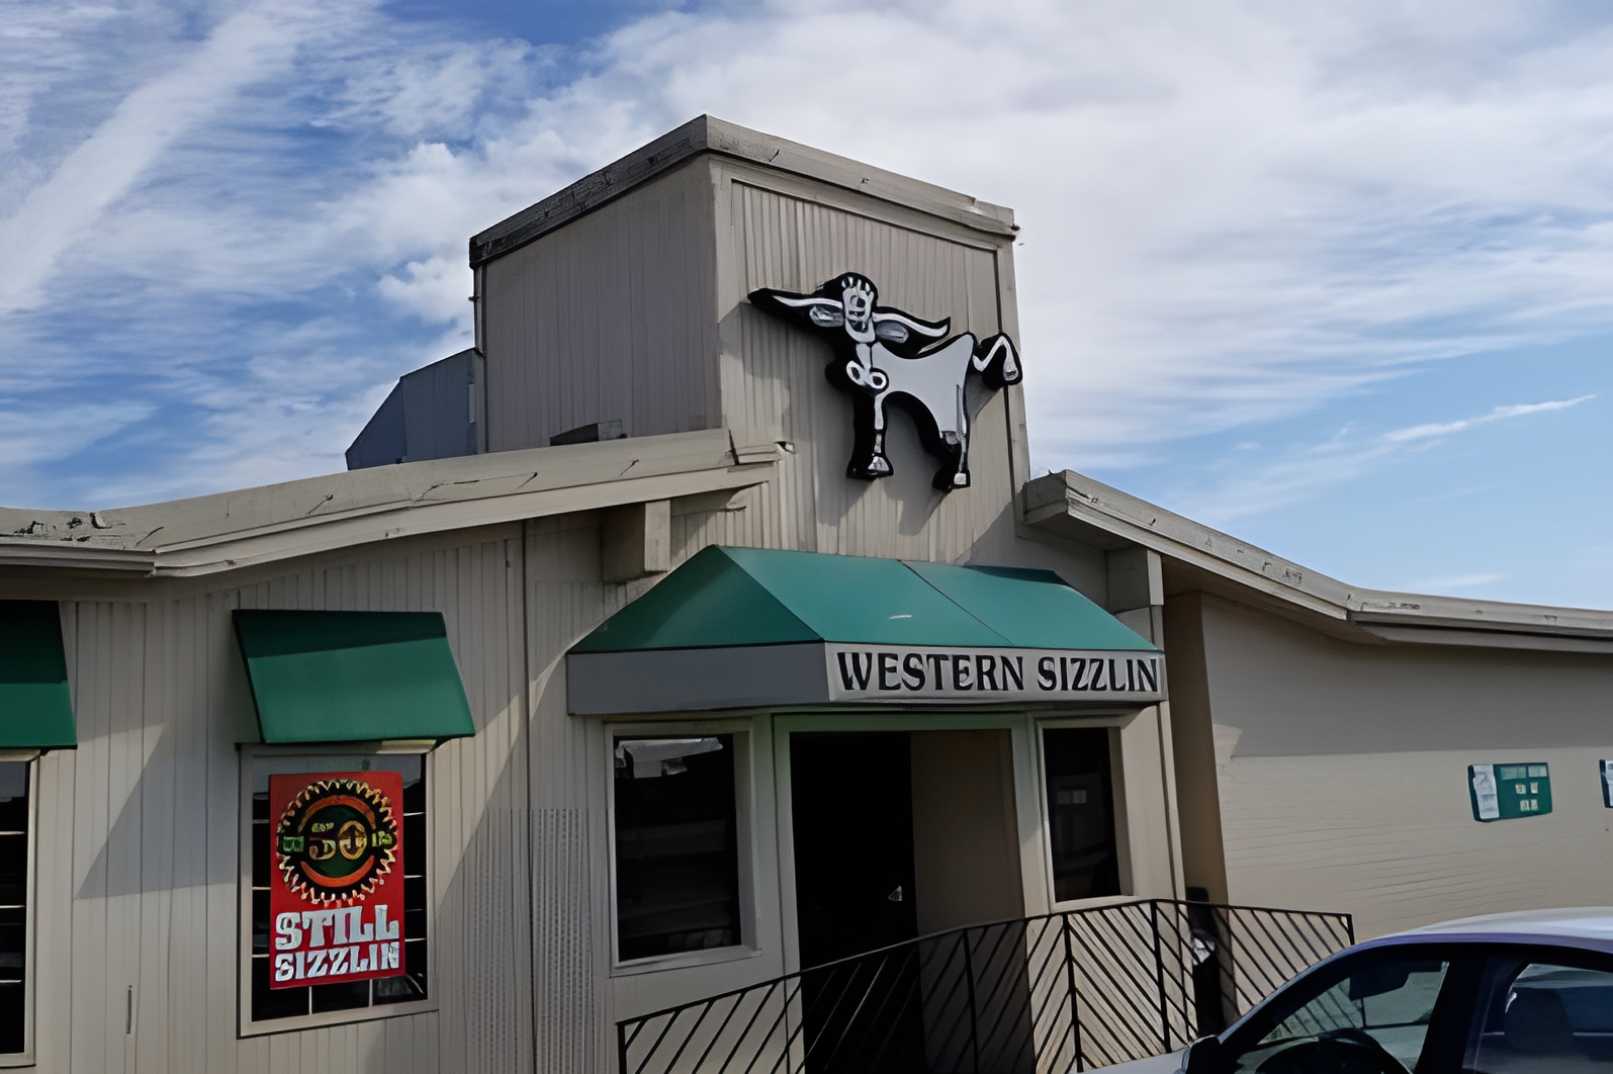 The Western Sizzlin Best Restaurants in Danville, VA